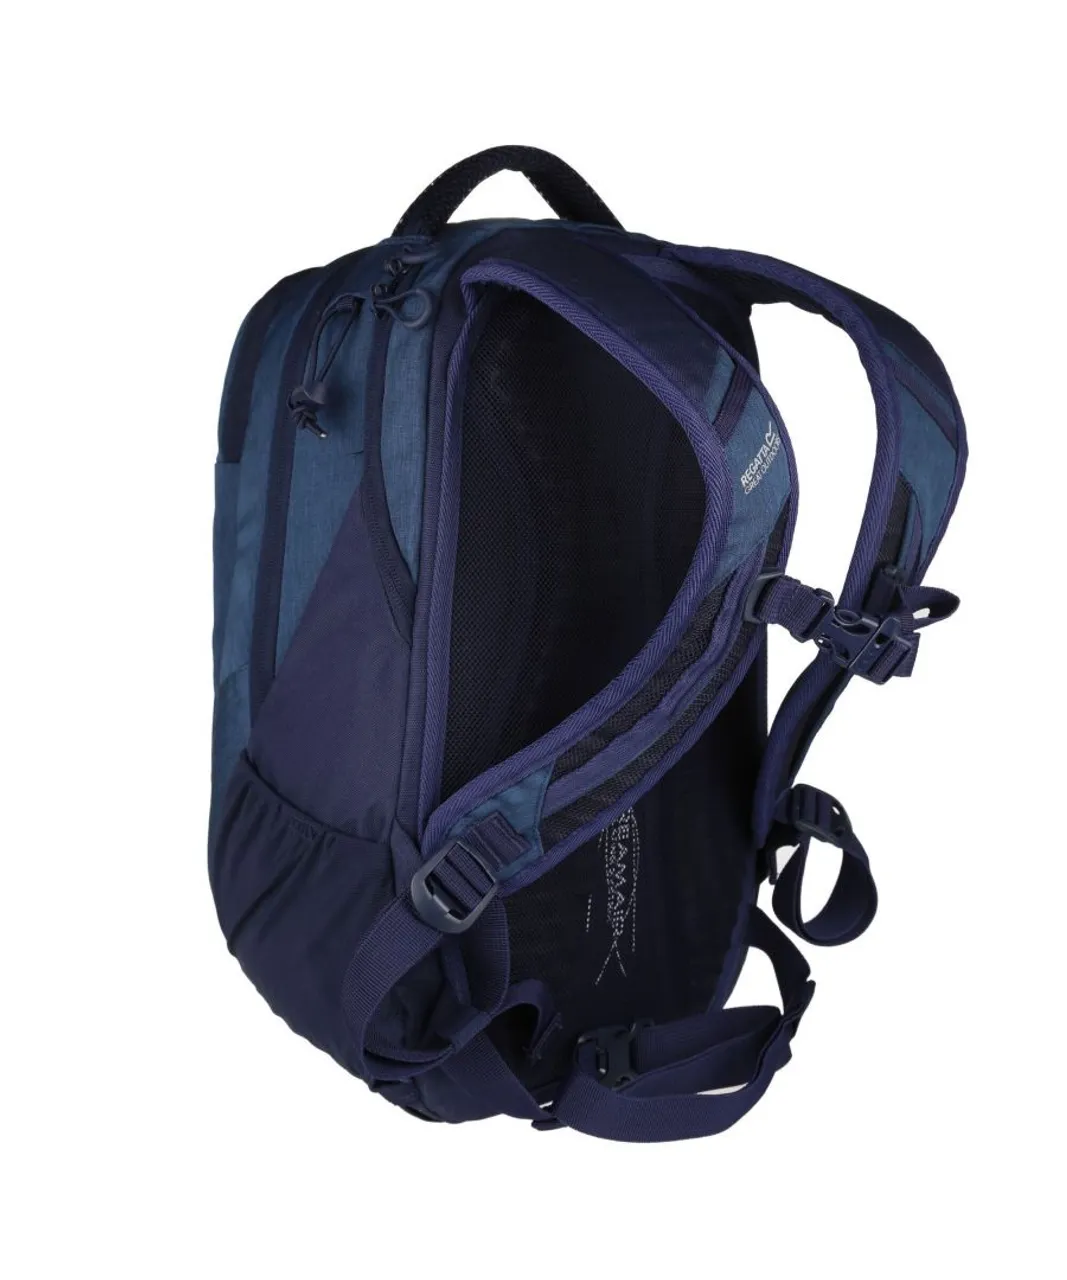 Regatta Unisex Adult Oakridge 20L Backpack (Navy/Dark Denim) - One Size